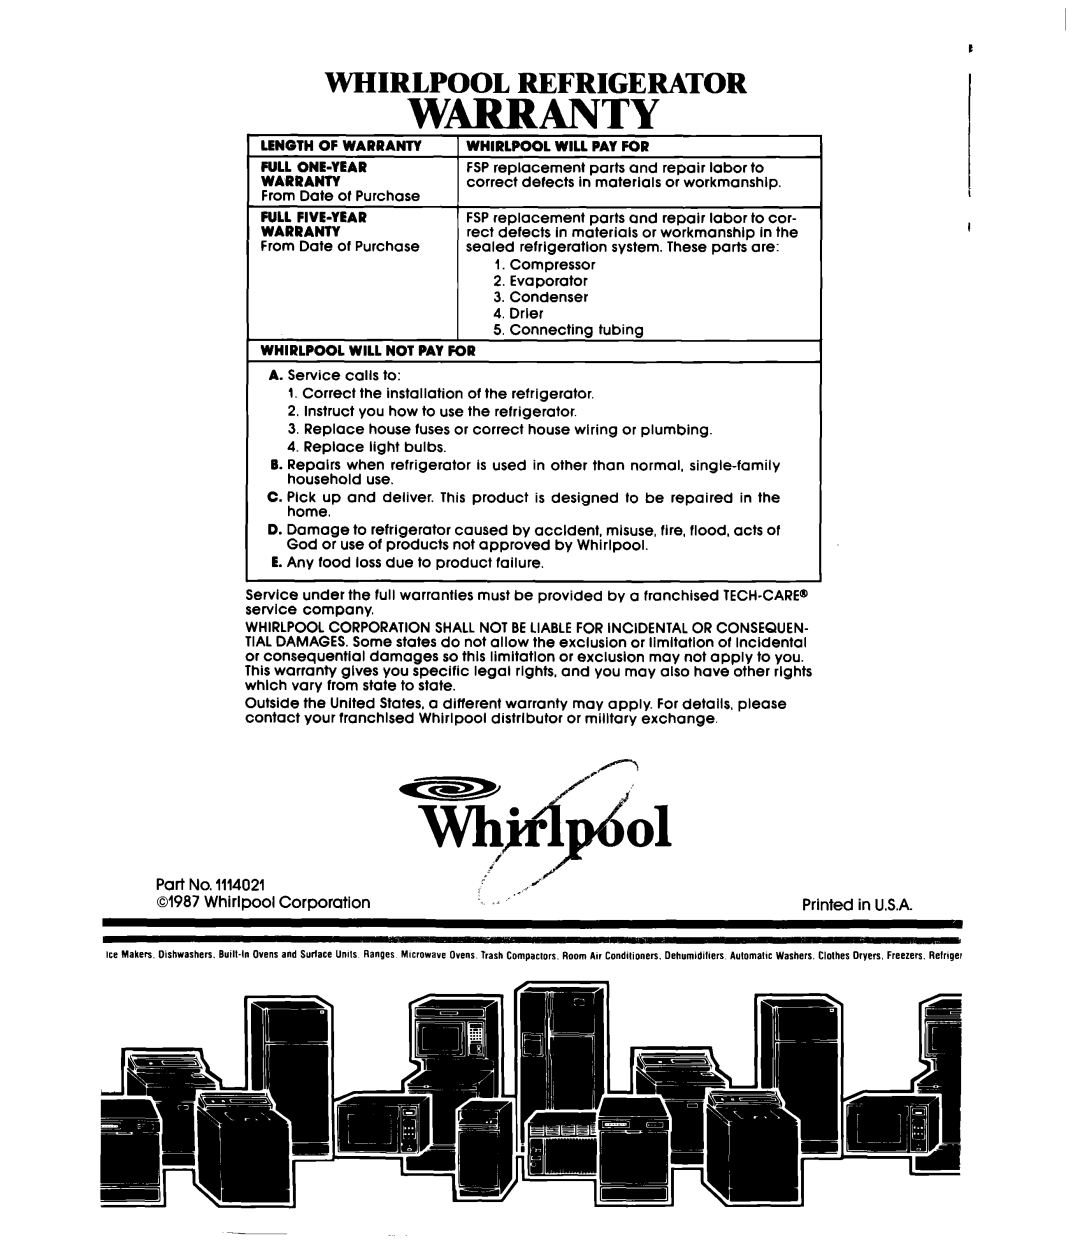 Whirlpool ETl6JK manual Whirlpool, Refrigerator, WmANTY 